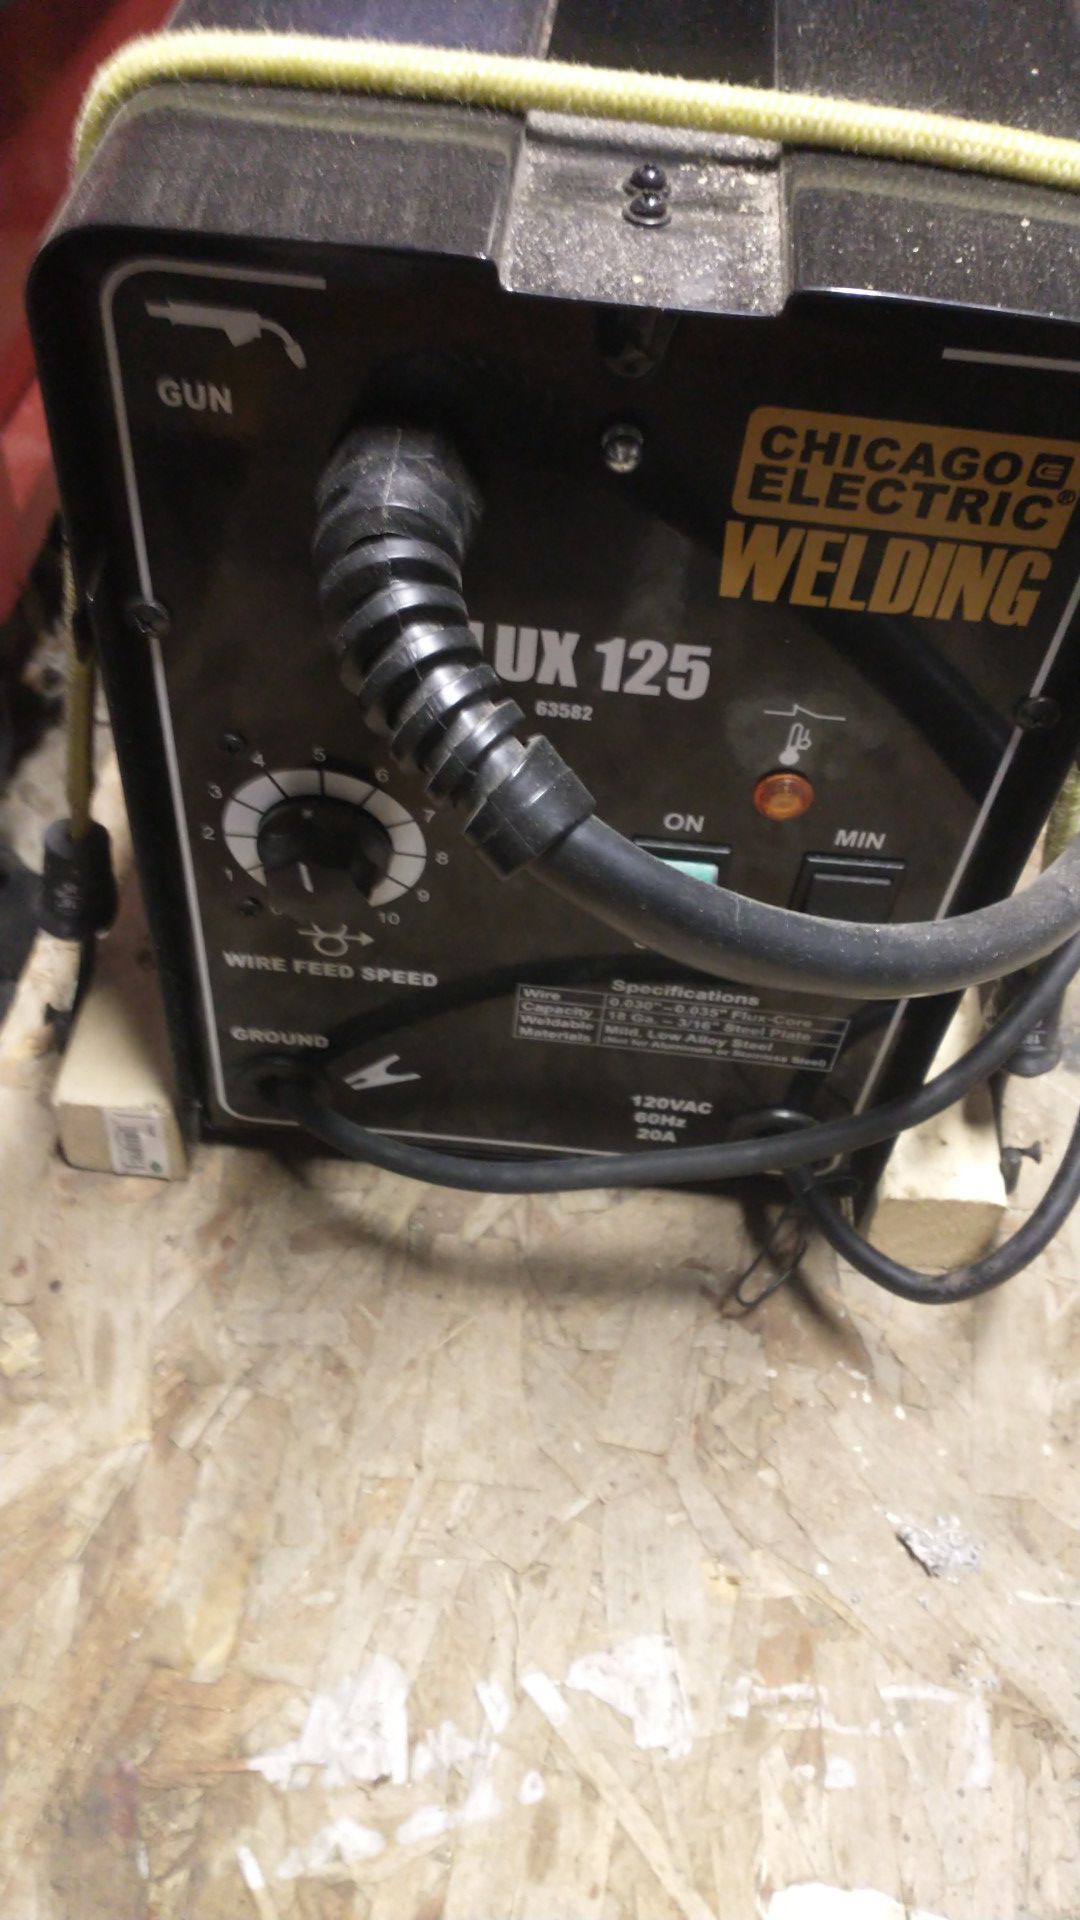 Chicago electric flux 124 welder